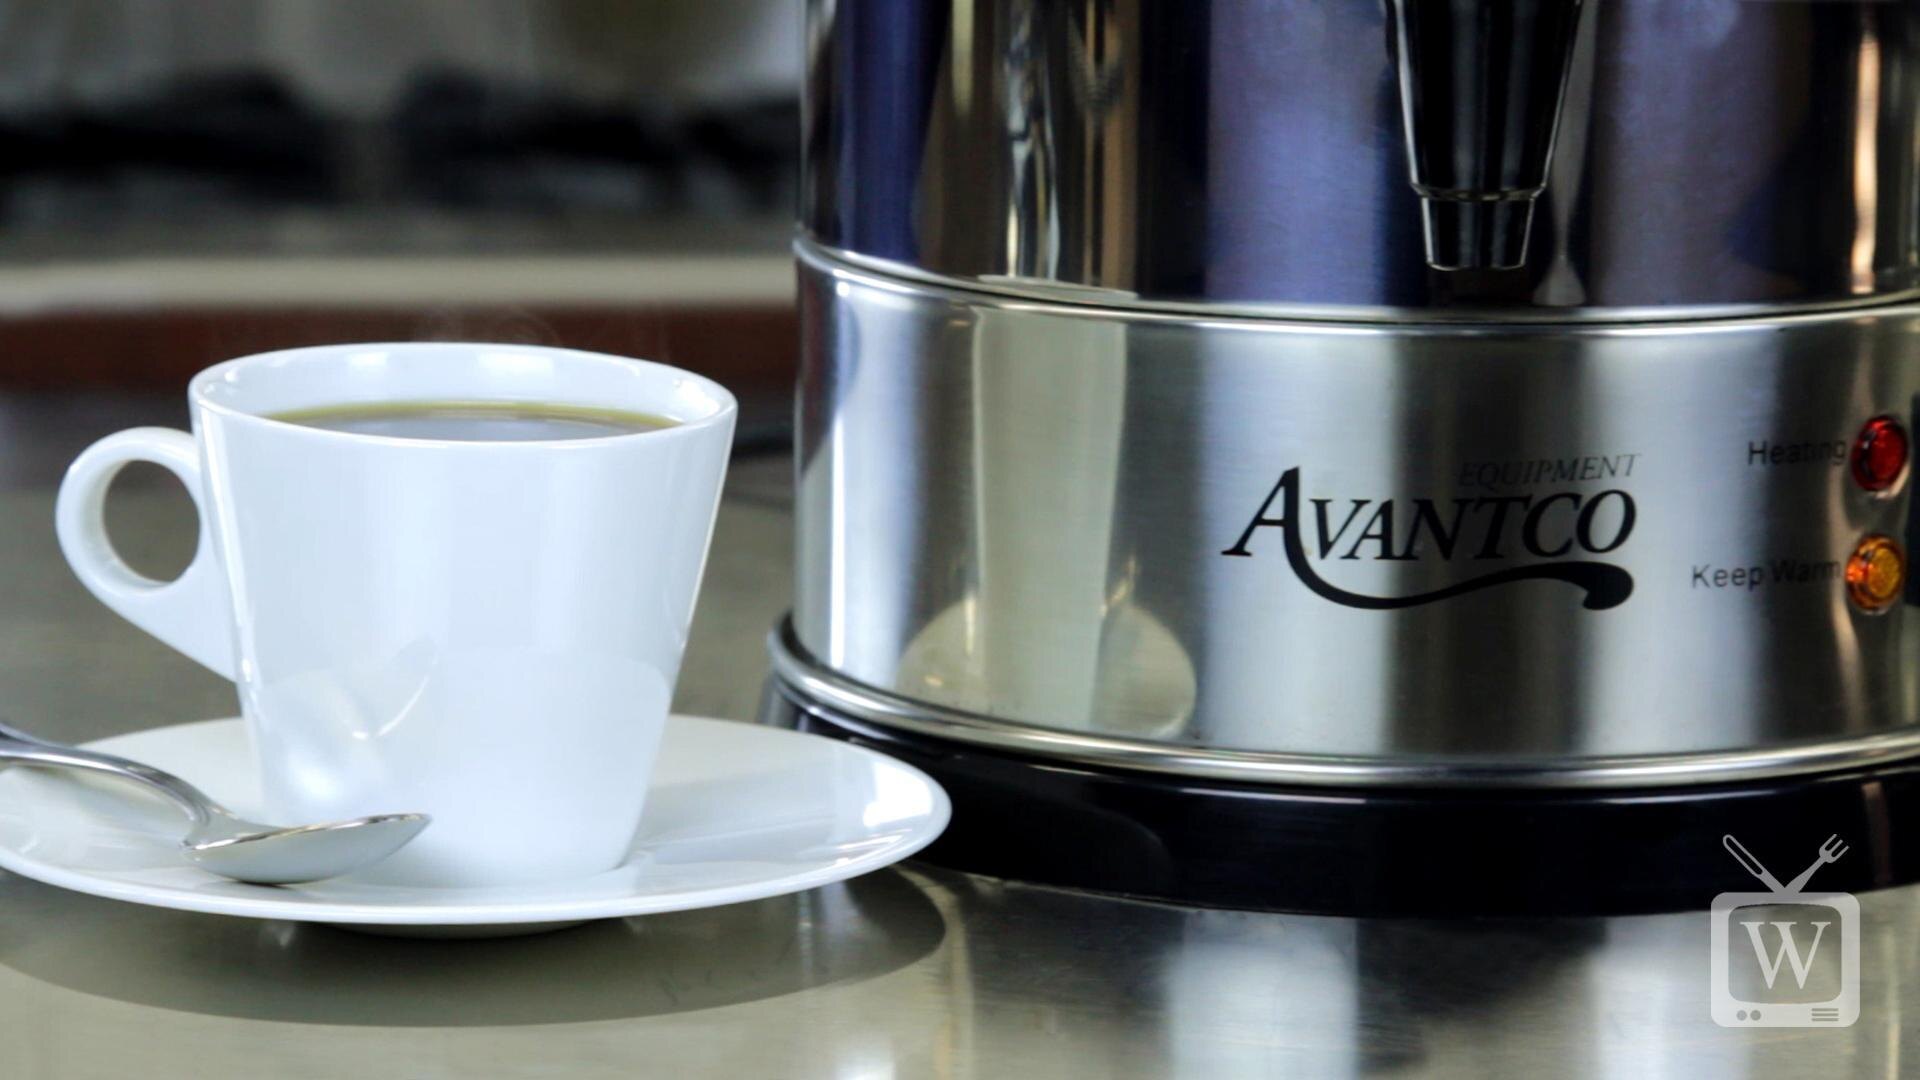 Avantco CU100ETL 100 Cup (500 oz) Double Wall Stainless Steel Coffee Urn / Coffee Percolator - 1500W, ETL